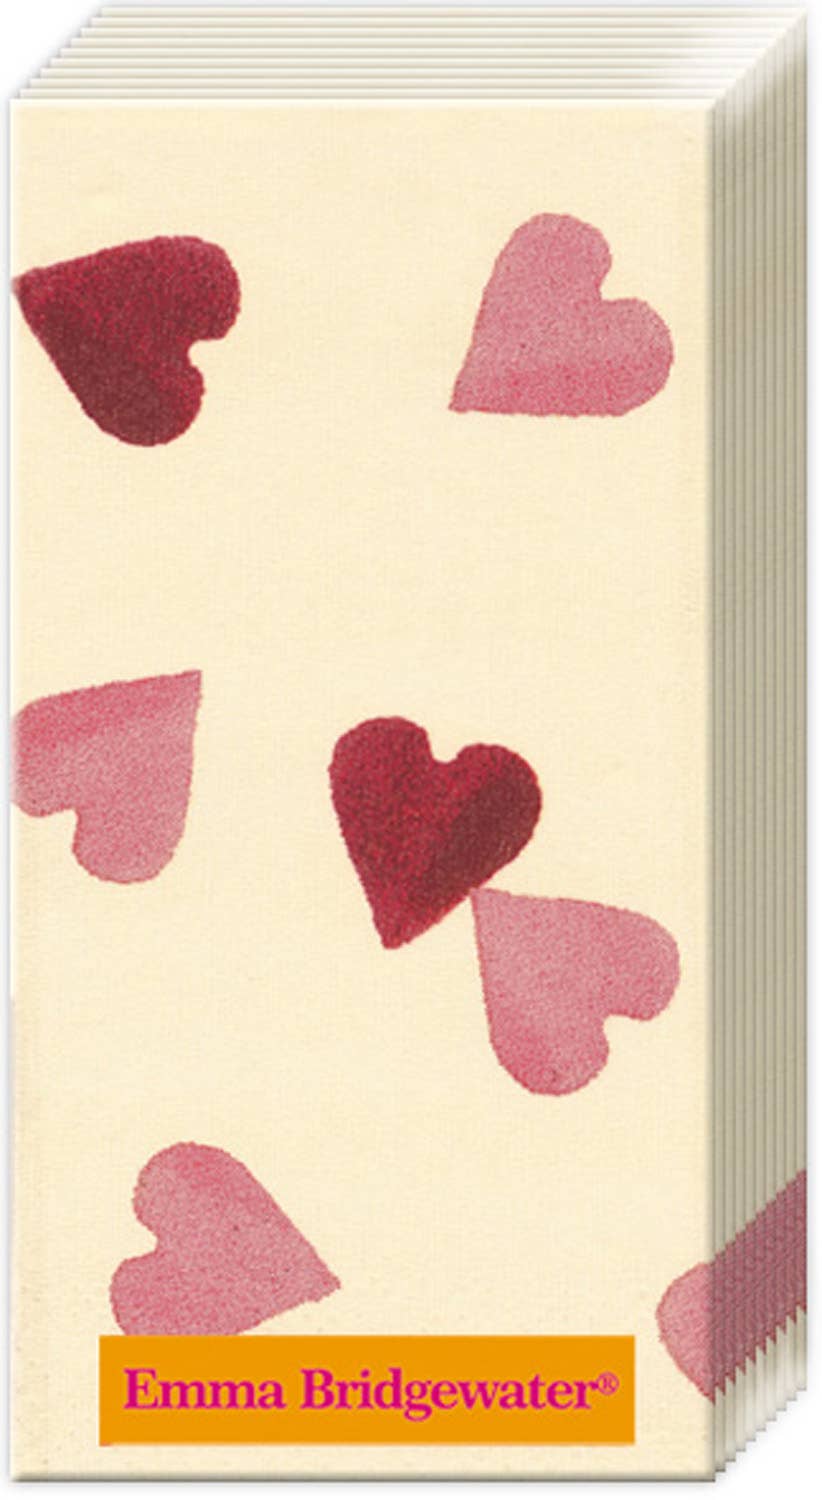 Pocket Travel Tissues - Emma Bridgewater Hearts